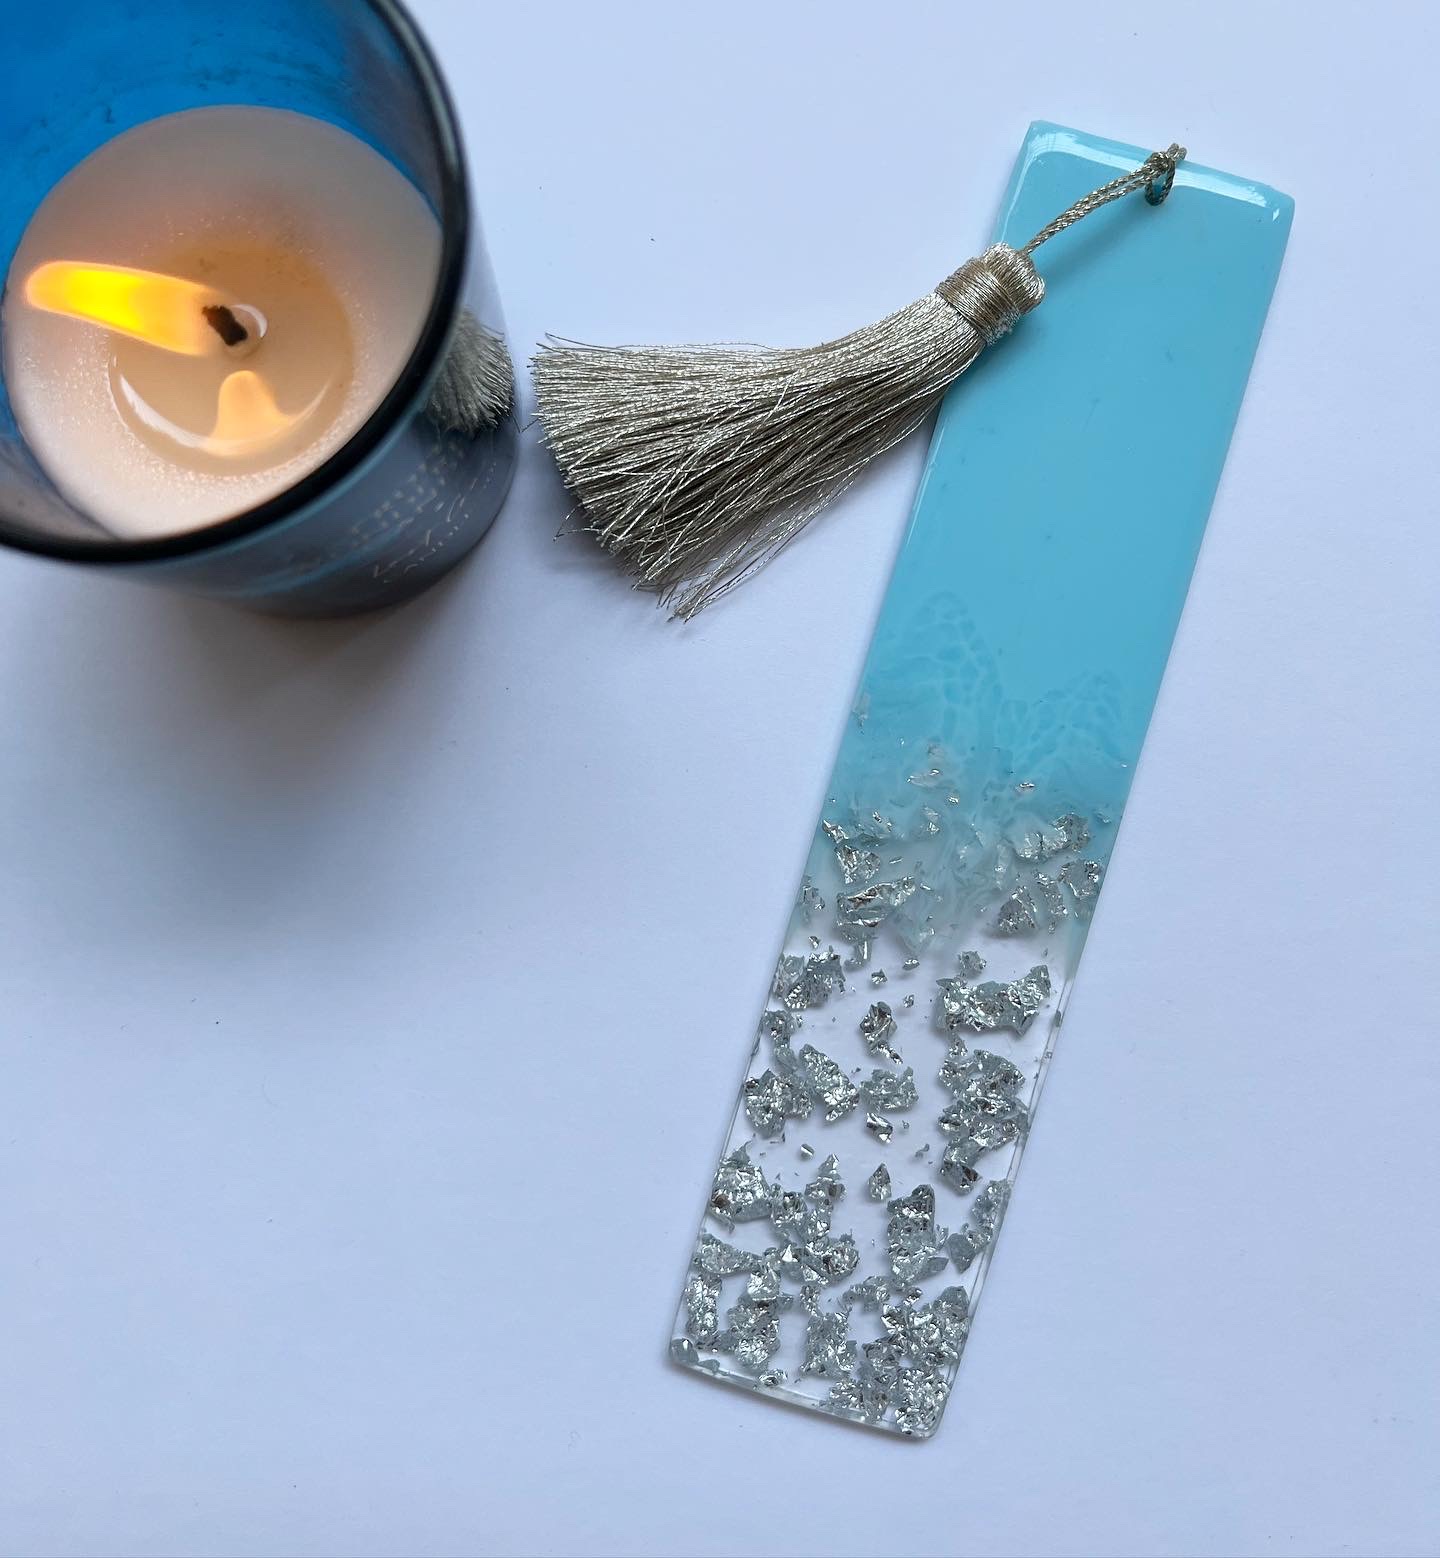 Craftin Resin bookmark – Pastel blue